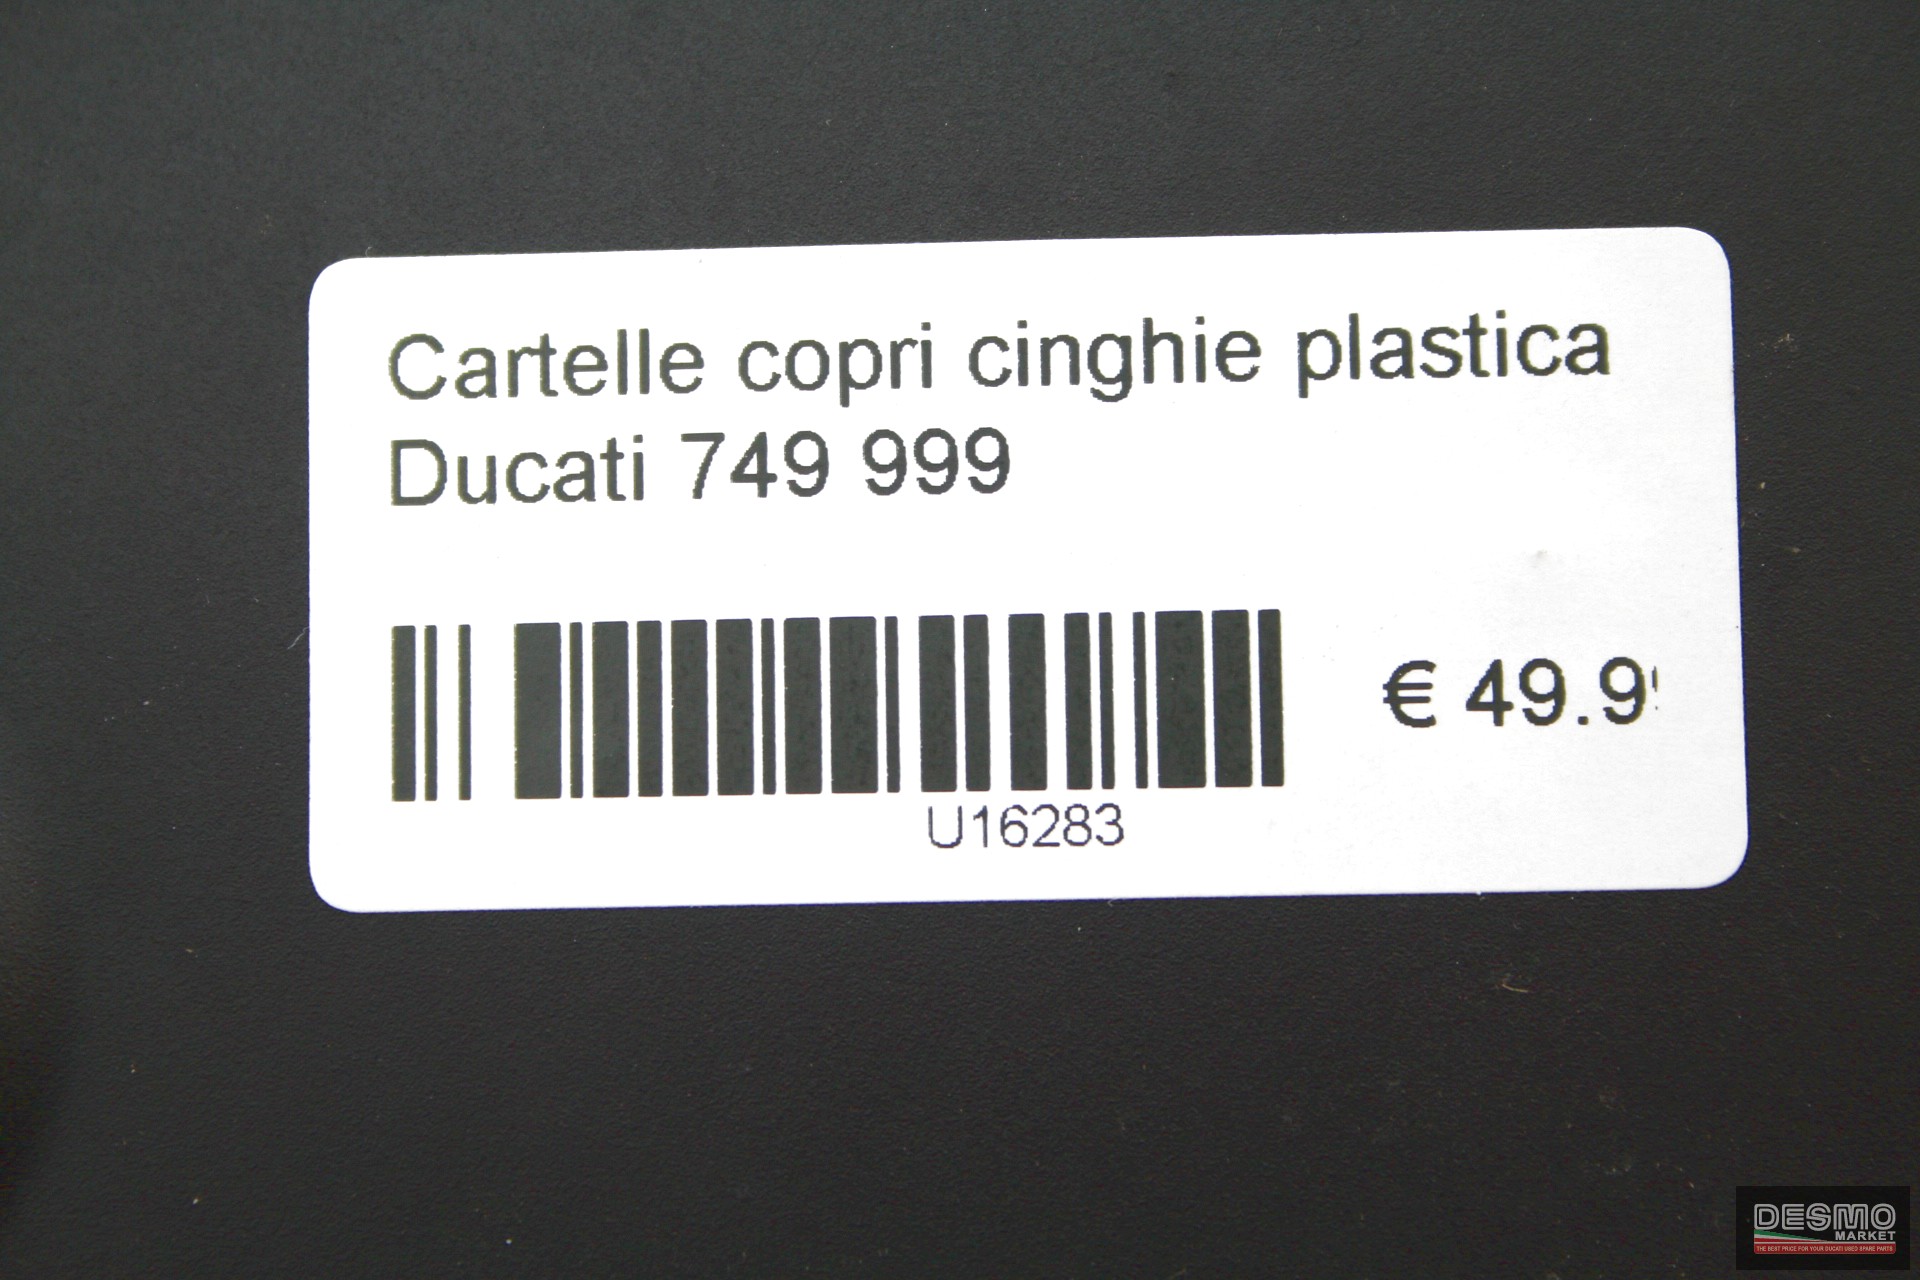 Cartelle copri cinghie plastica Ducati 749 999